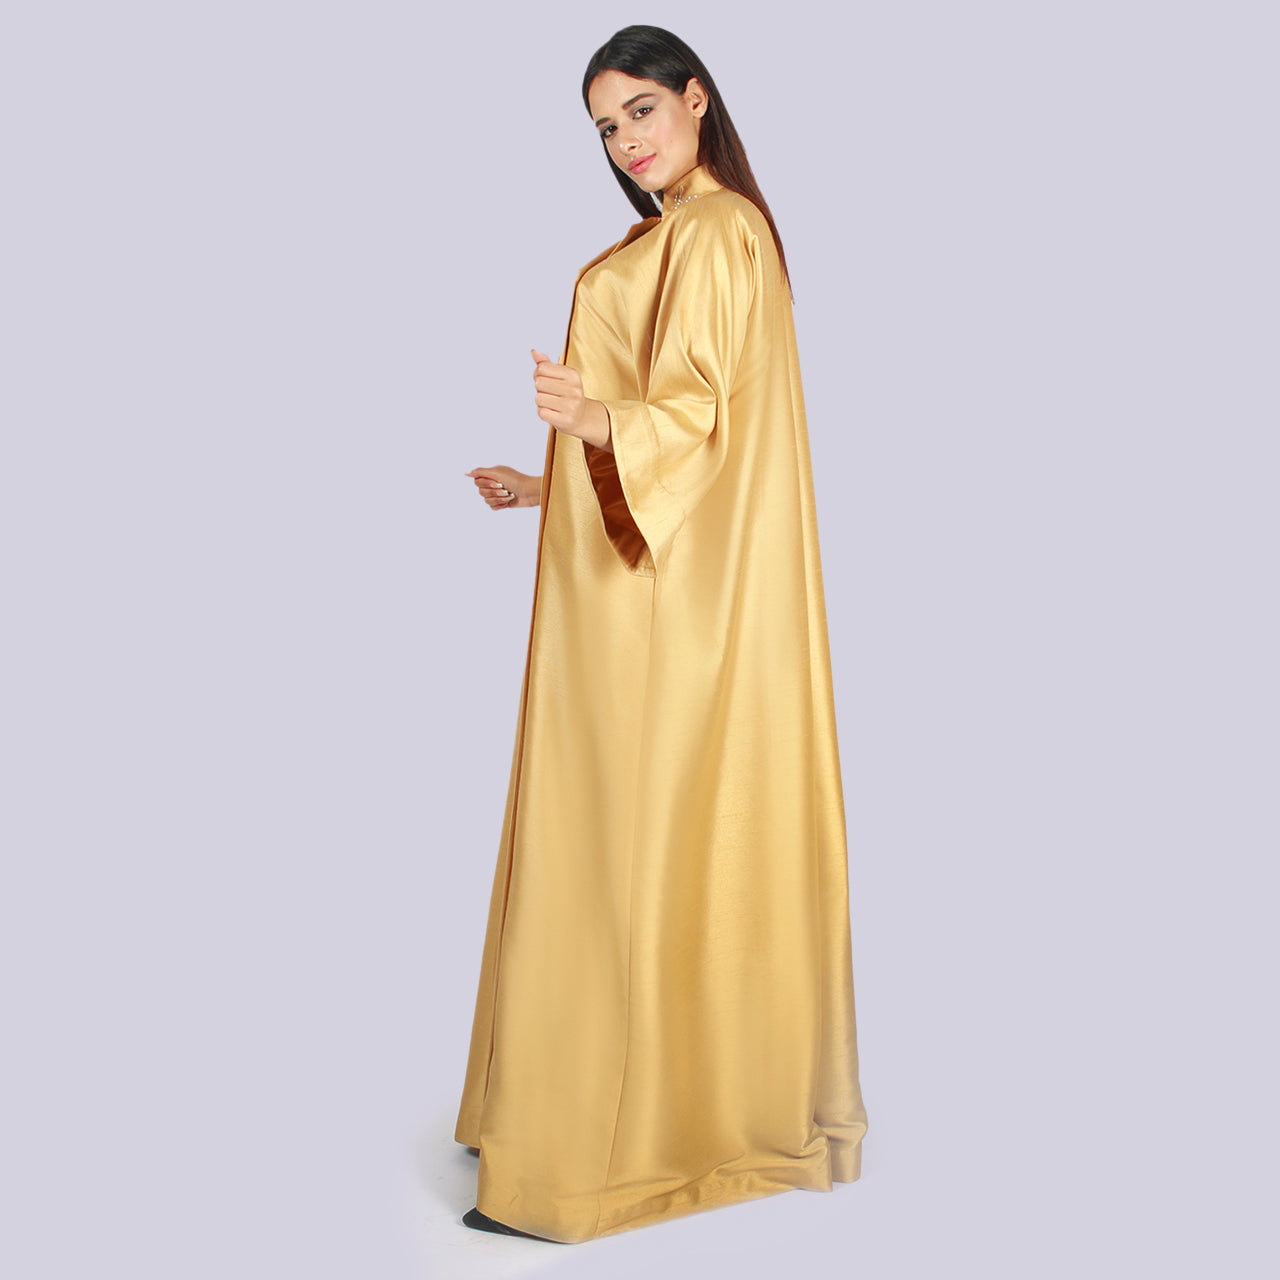 Princely - Coat Emb Abaya